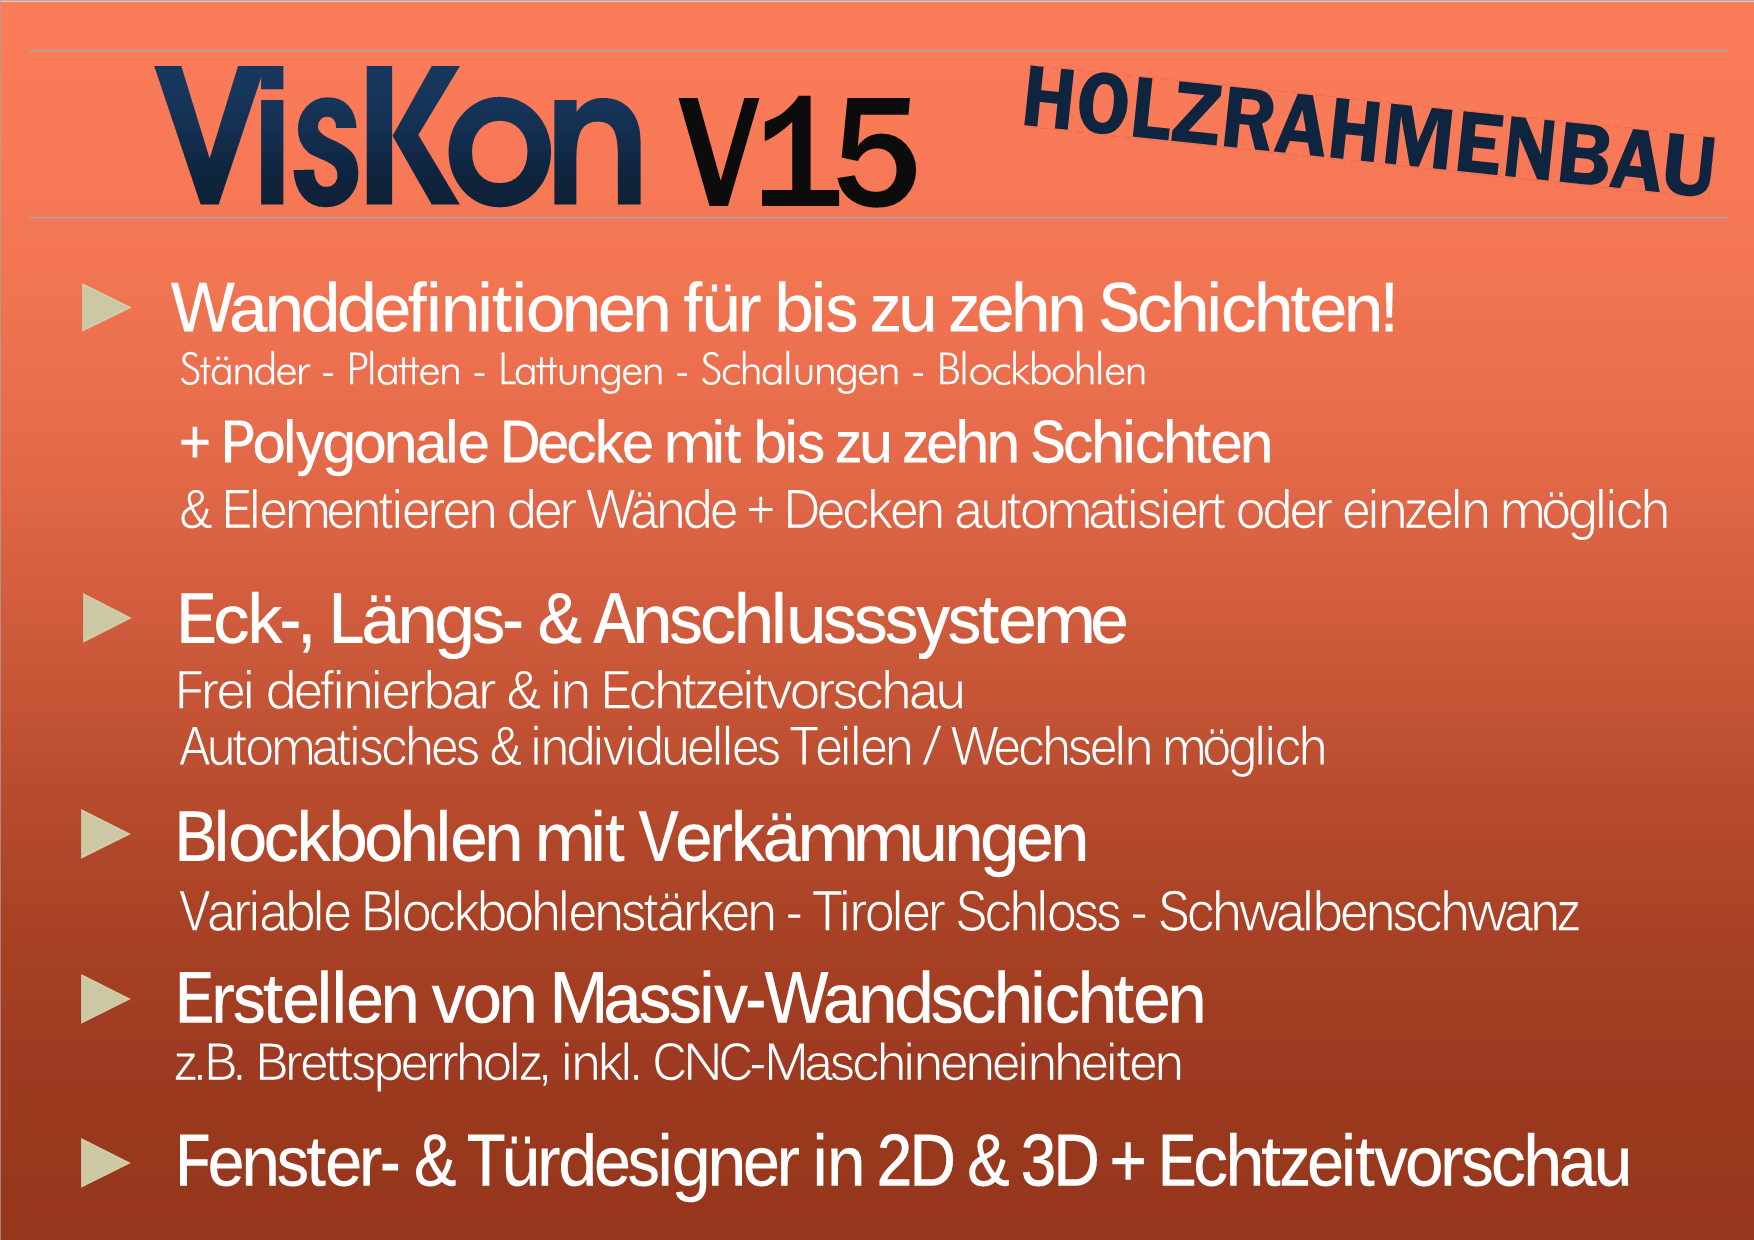 VISKON V15 3D-CAD/CAM HOLZRAHMENBAU | Sektor B - Jahresmiete mit Softwarepflege & Wartung 